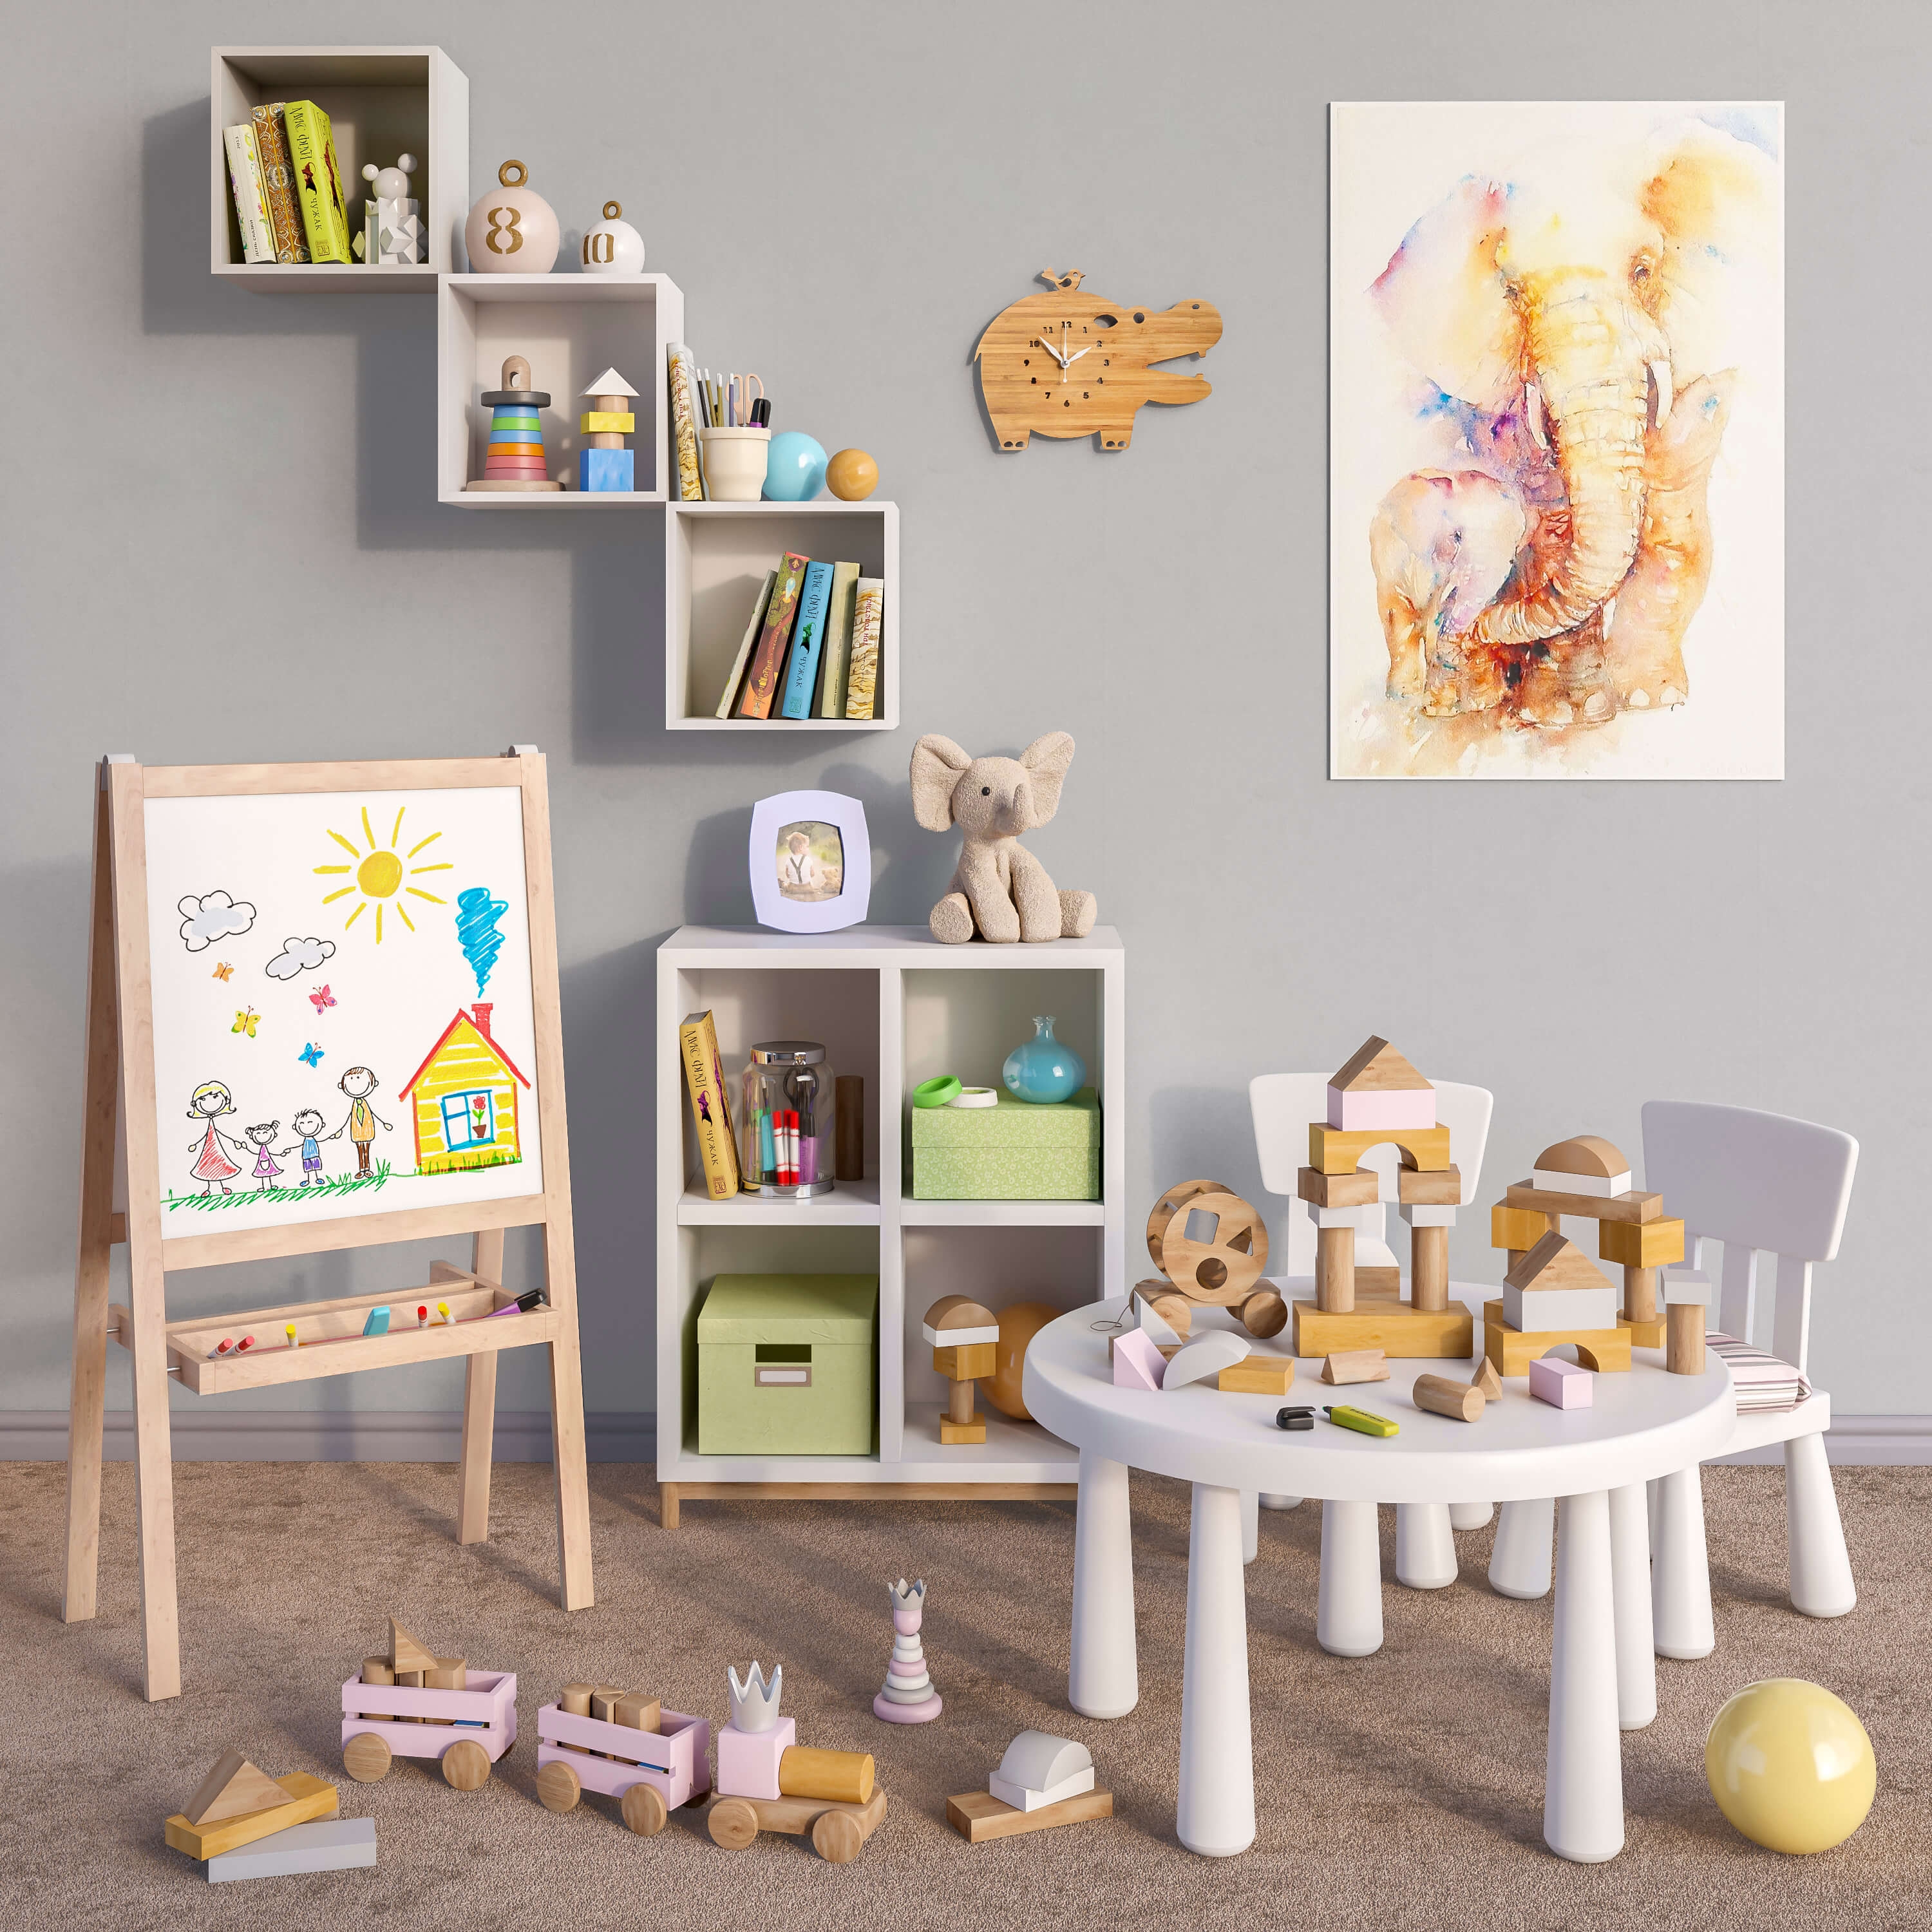 Decorative set / Full furniture set / Toys / Other Items 1